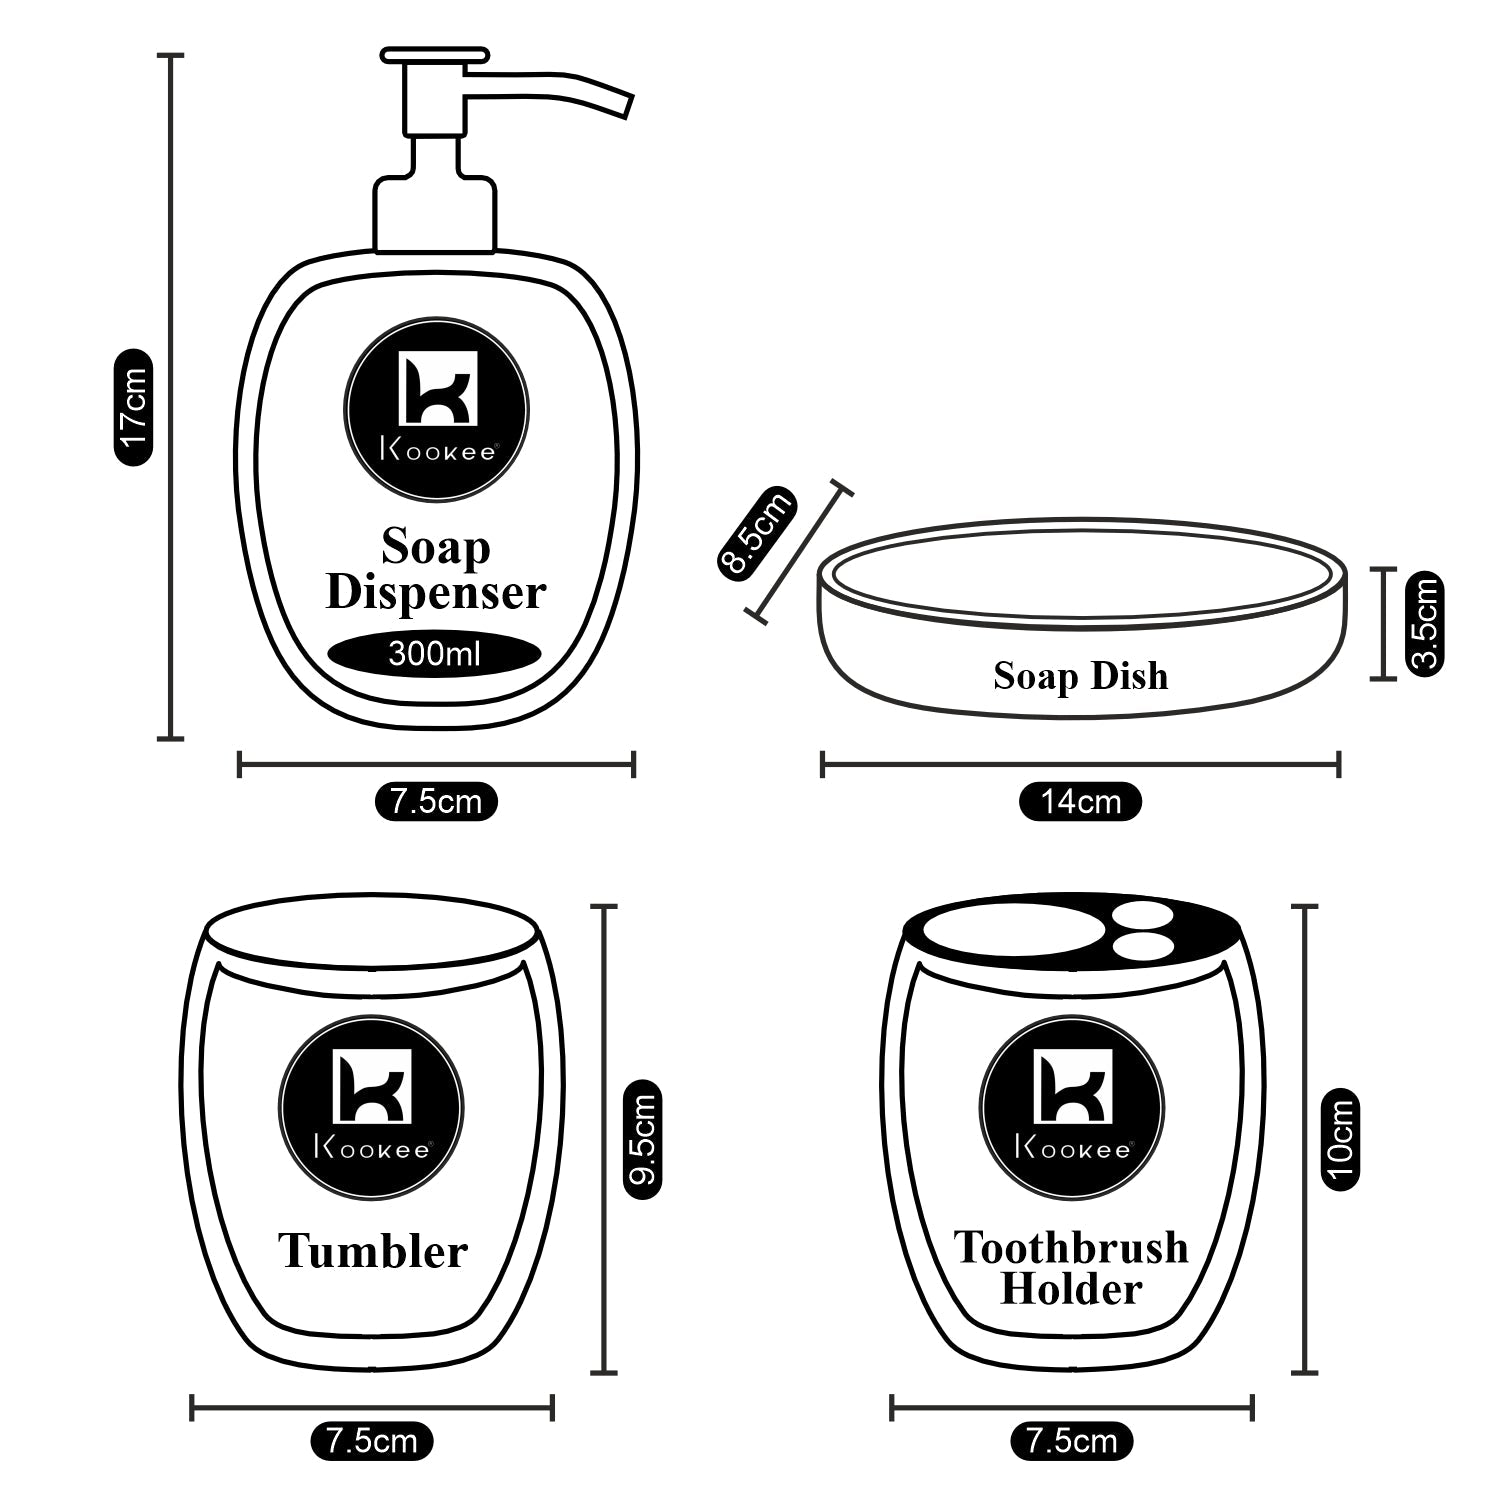 Ceramic Bathroom Accessories Set of 4 Bath Set with Soap Dispenser (10212)